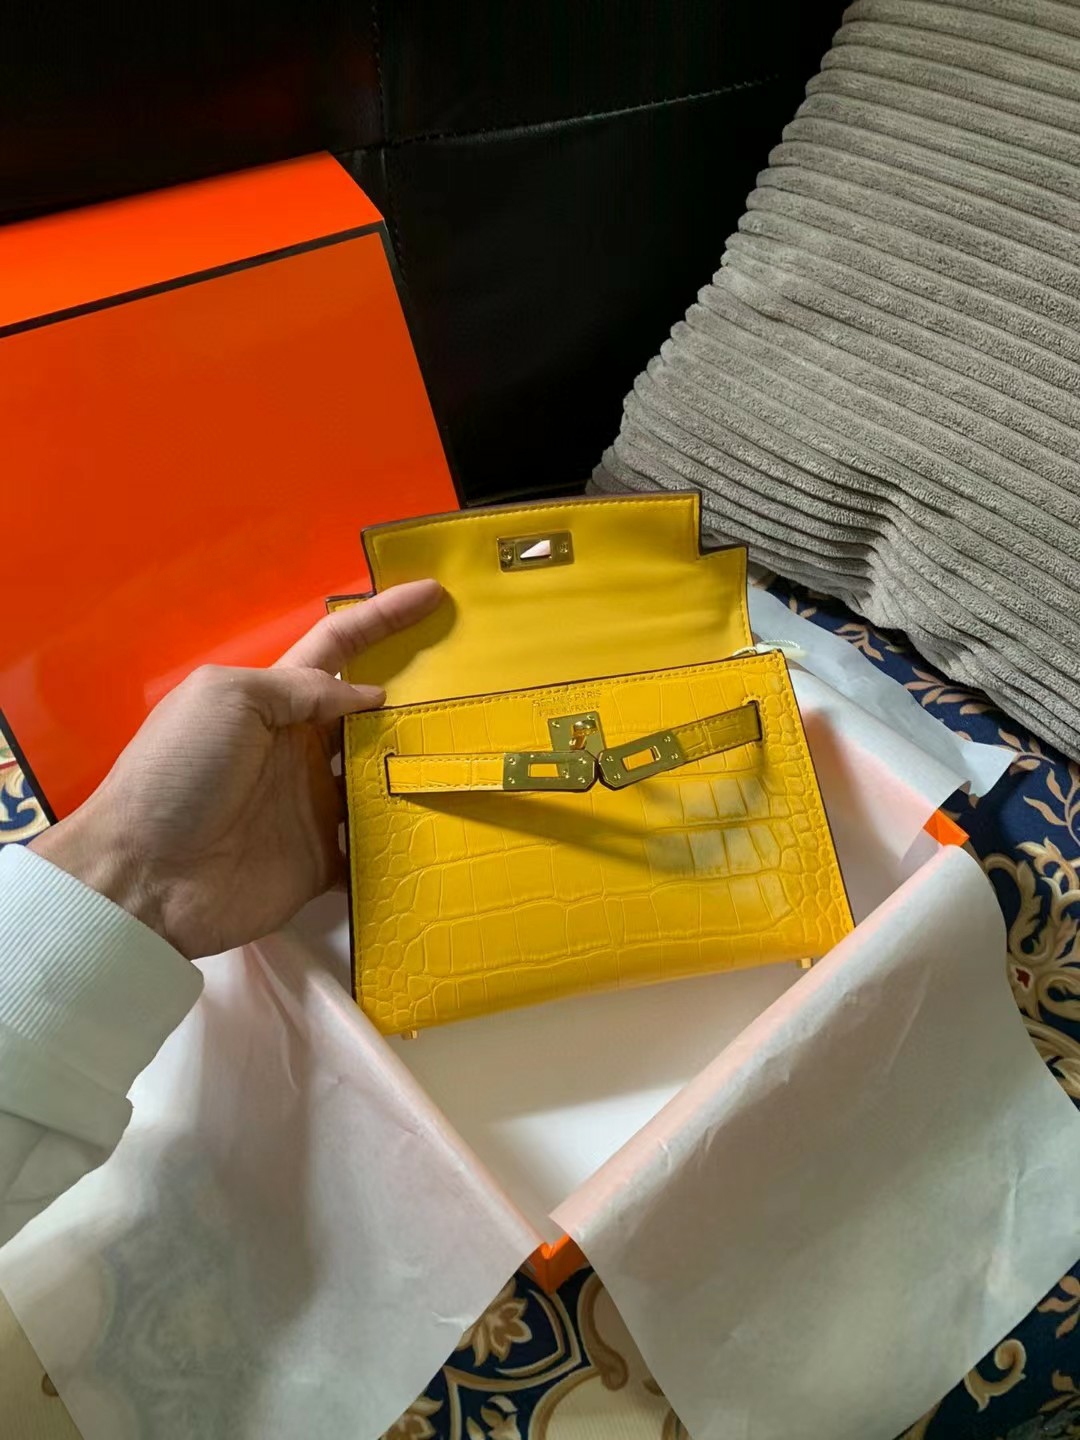 

Aimashi Designer 19cm Mini 2 Kely Handbag Totes Alligator Pattern Leather Top Handle Handbags Gold Hardware Buckle Bottom Rivet Dinner Purse Letter Print Tote Bags, Pink palm pattern